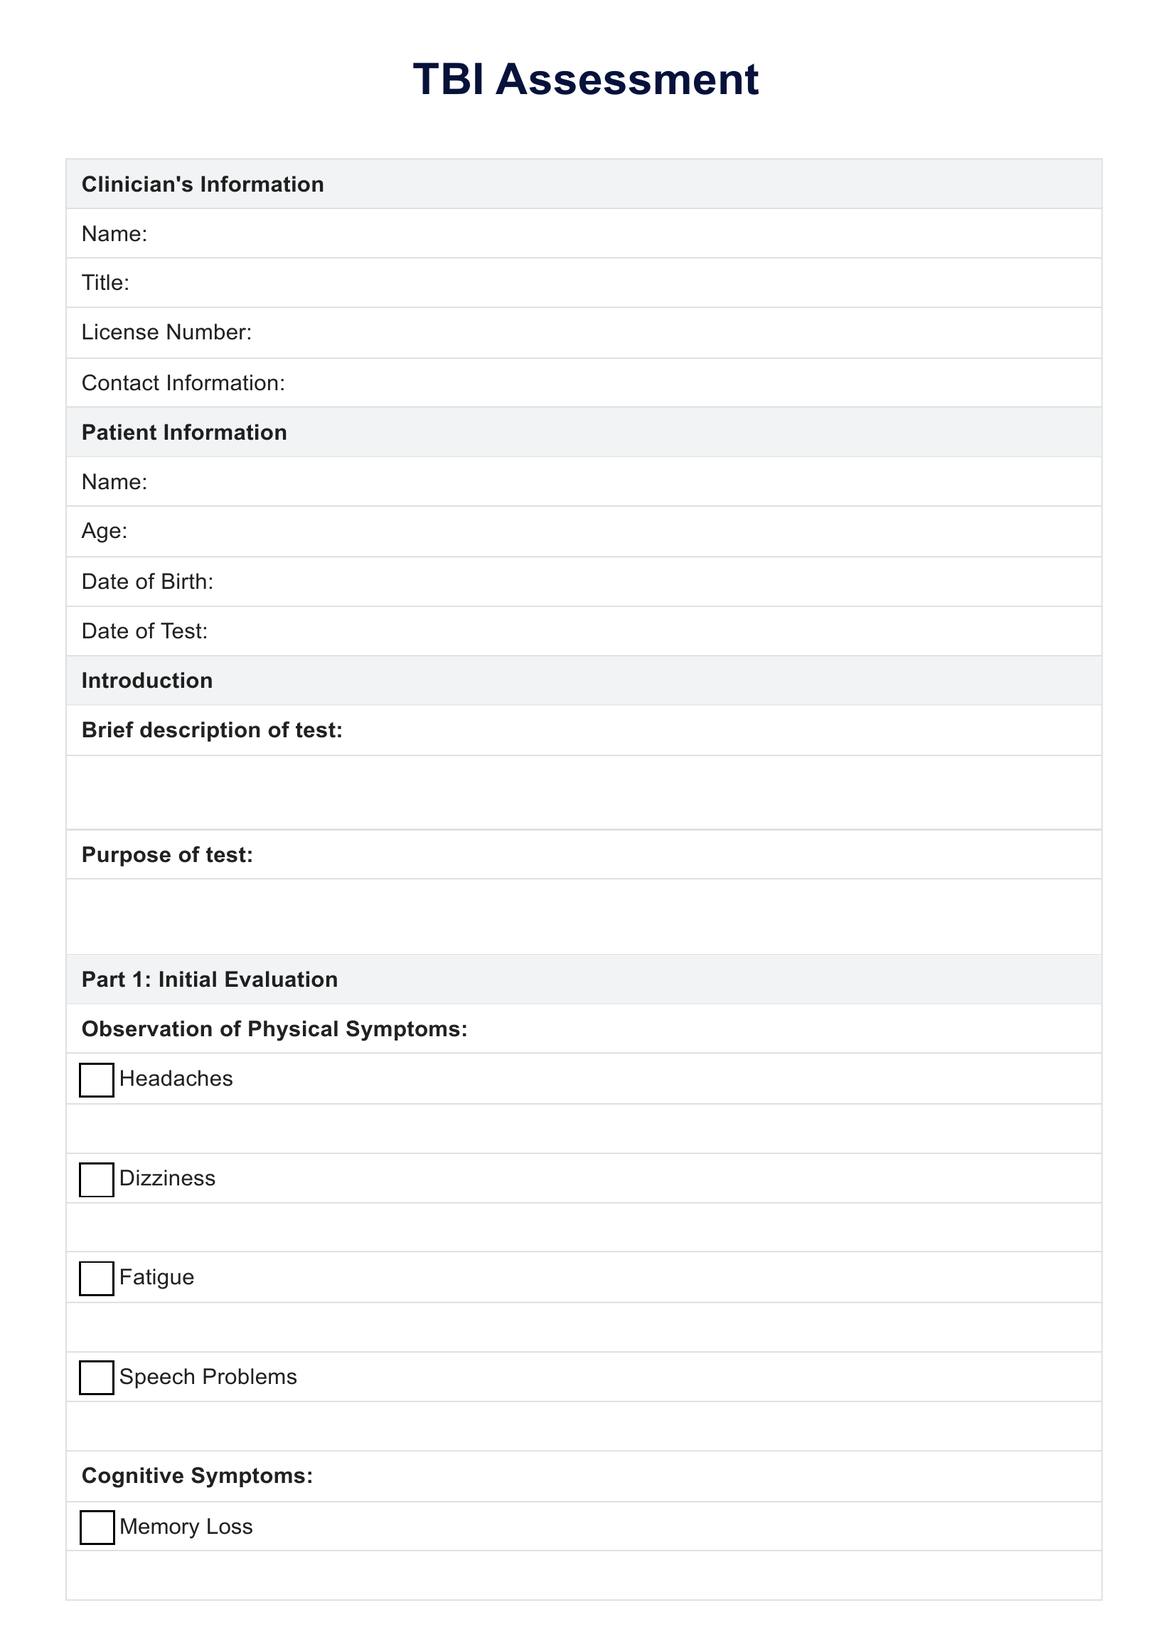 TBI Assessment PDF Example